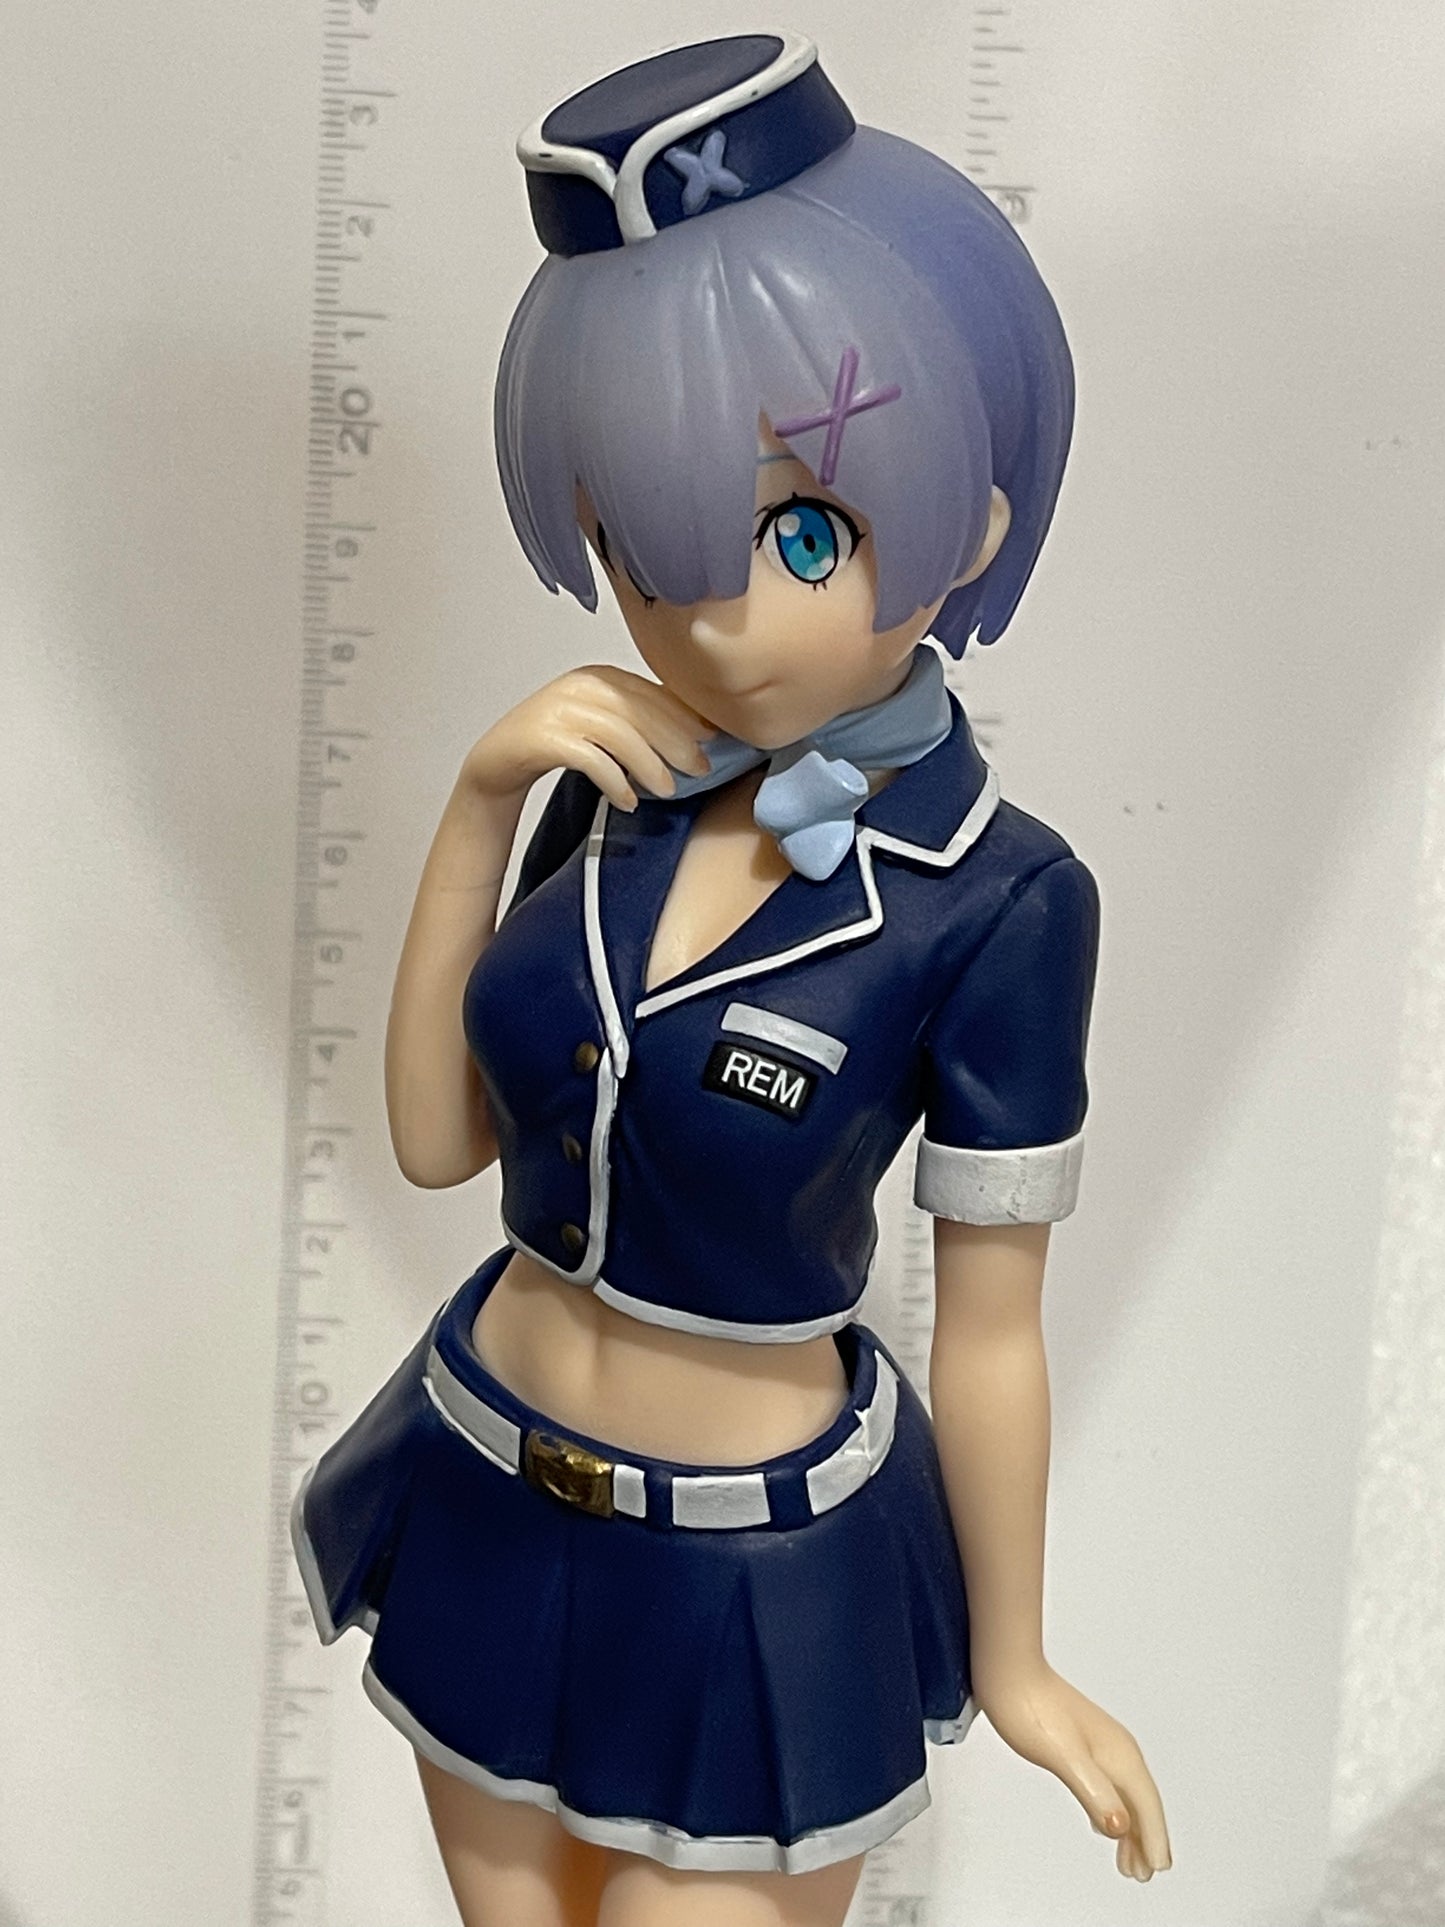 Re:Zero Lugnica Airlines Rem Anime Figure 24cm / Sega SPM #028